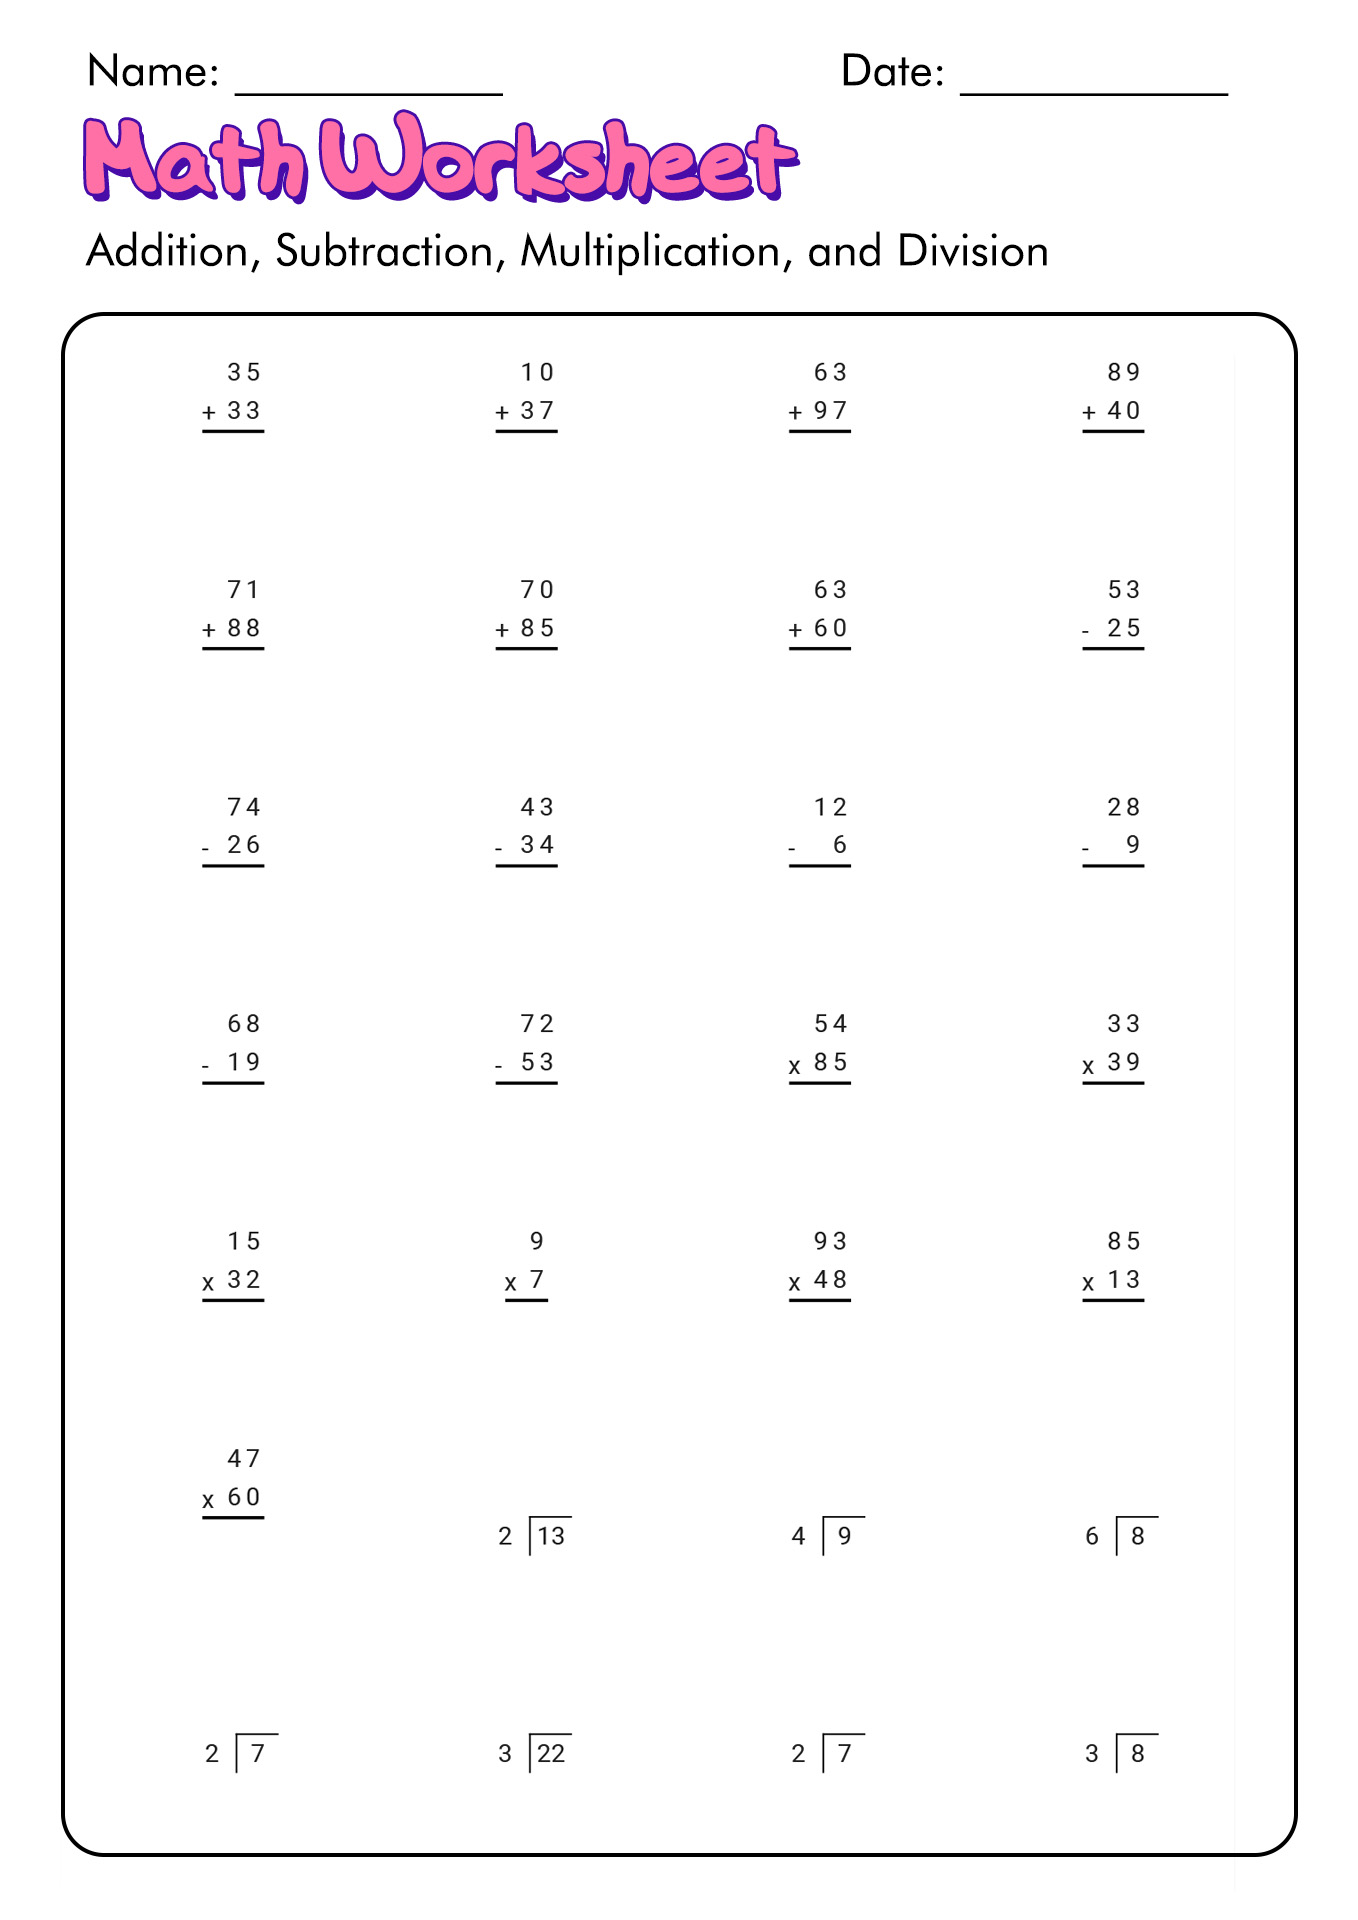 18 Best Images of Timed Addition Worksheets - Math Addition Timed Tests